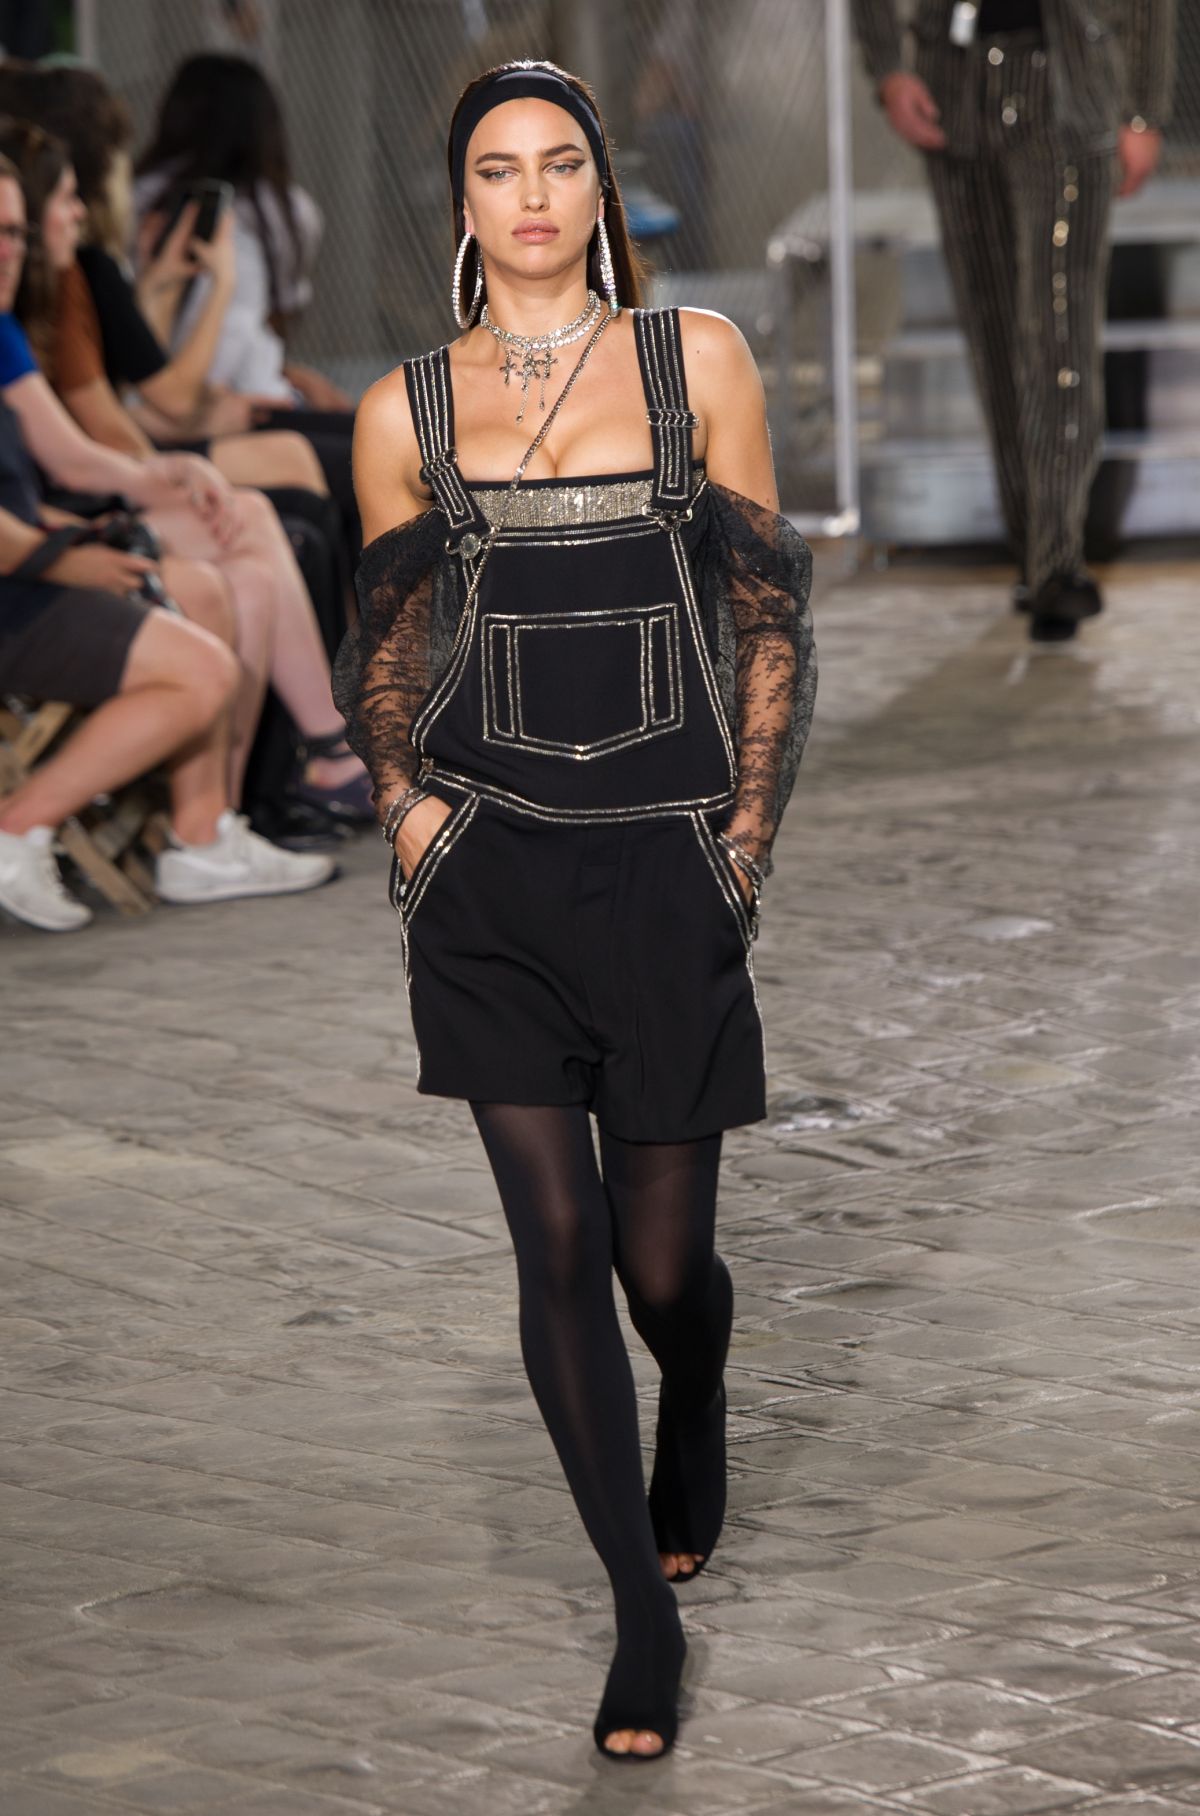 IRINA SHAYK on the Runway of Givenchy Fashion Show in Paris – HawtCelebs